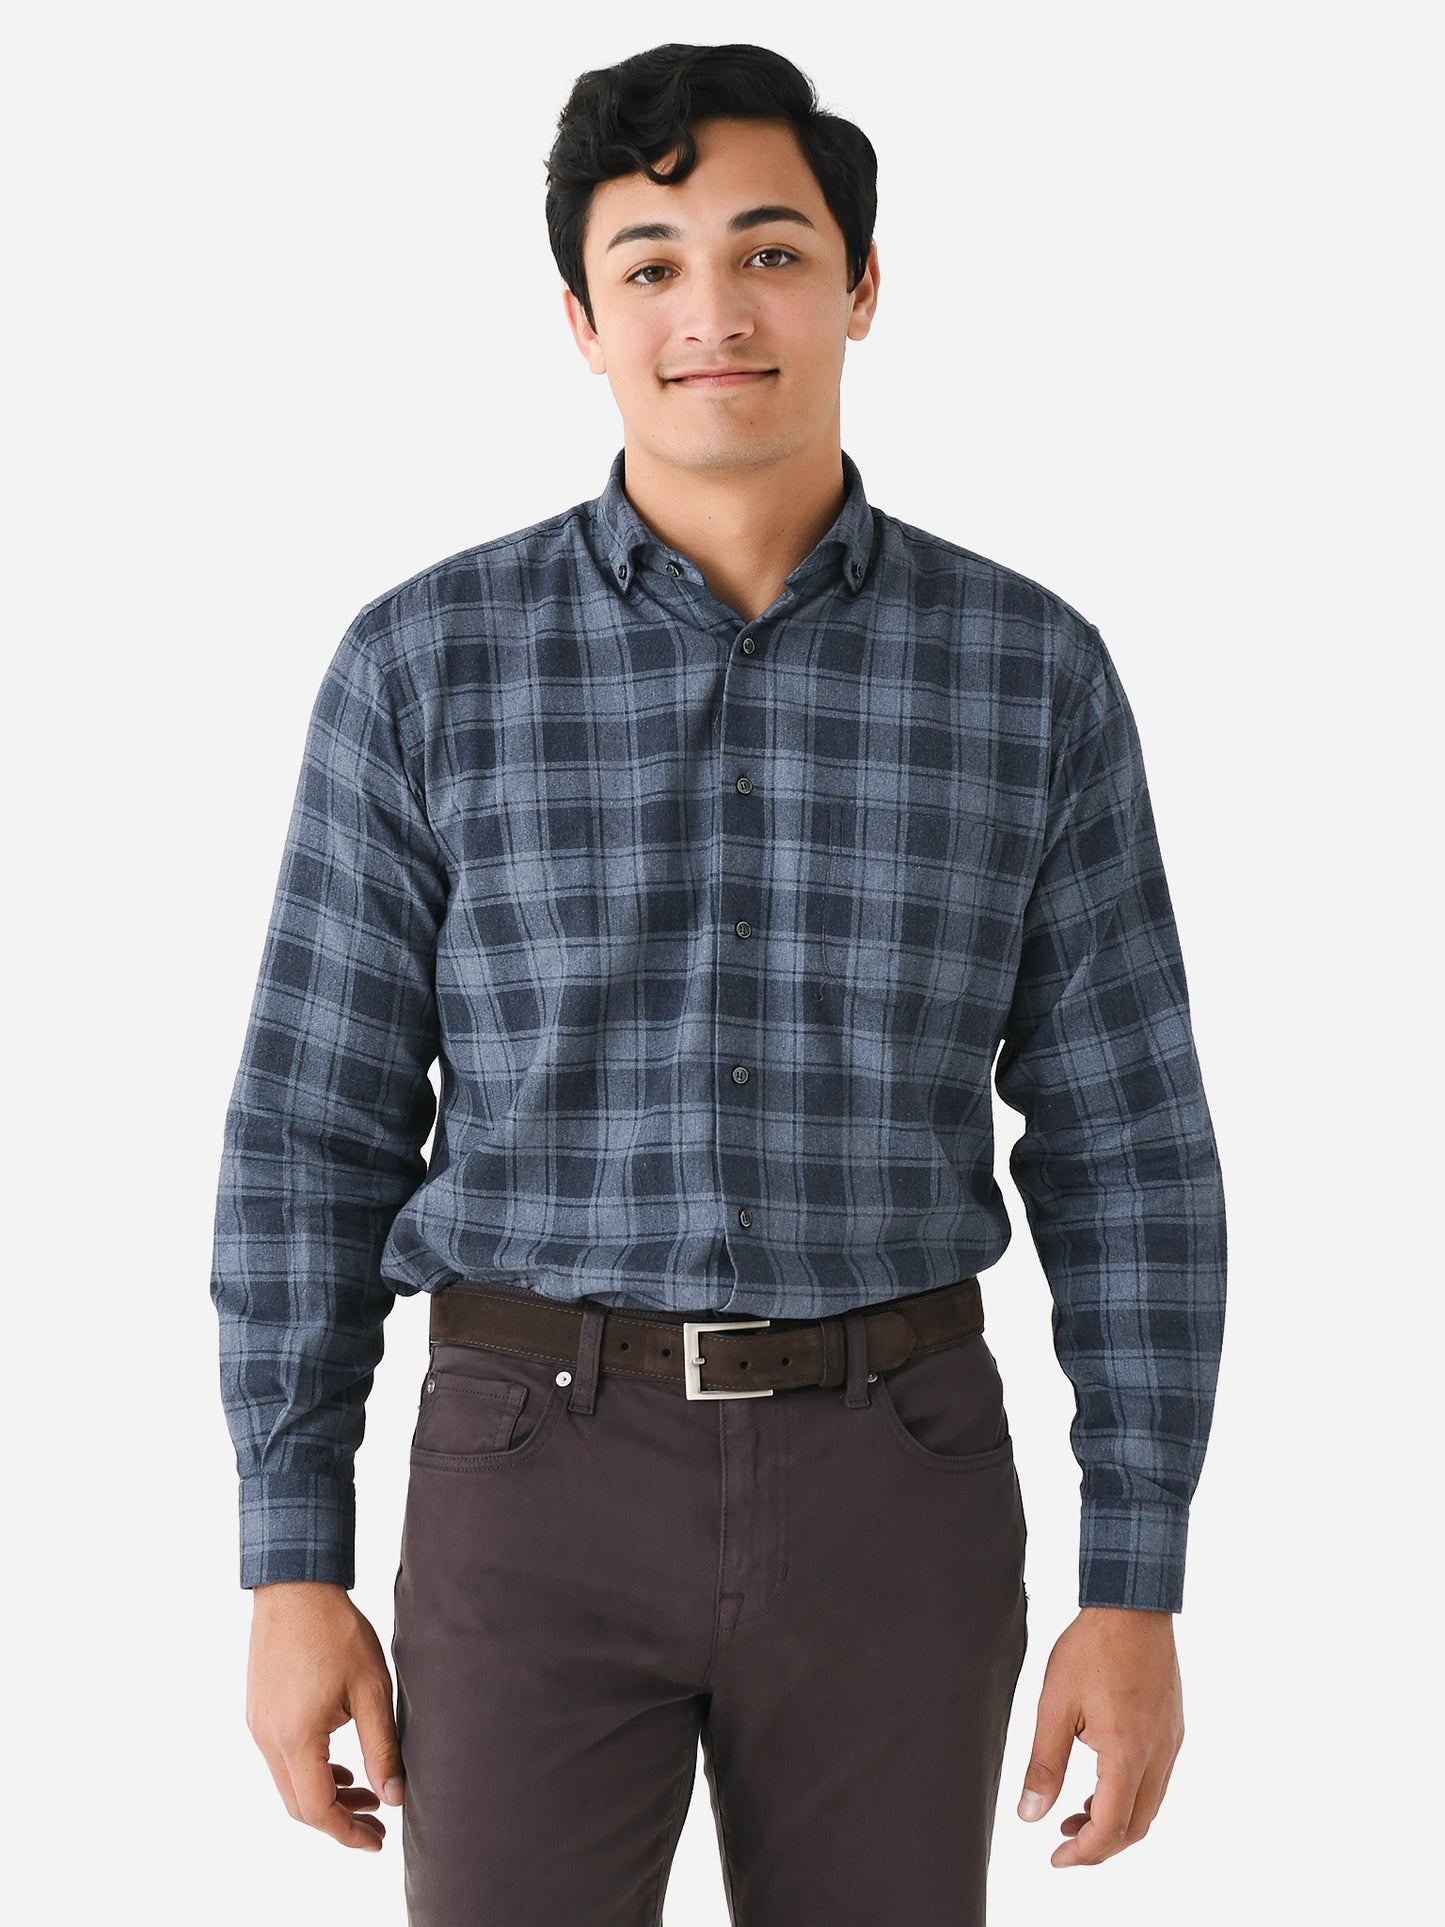 Miller Westby Men's Sheboygan Button-Down Shirt